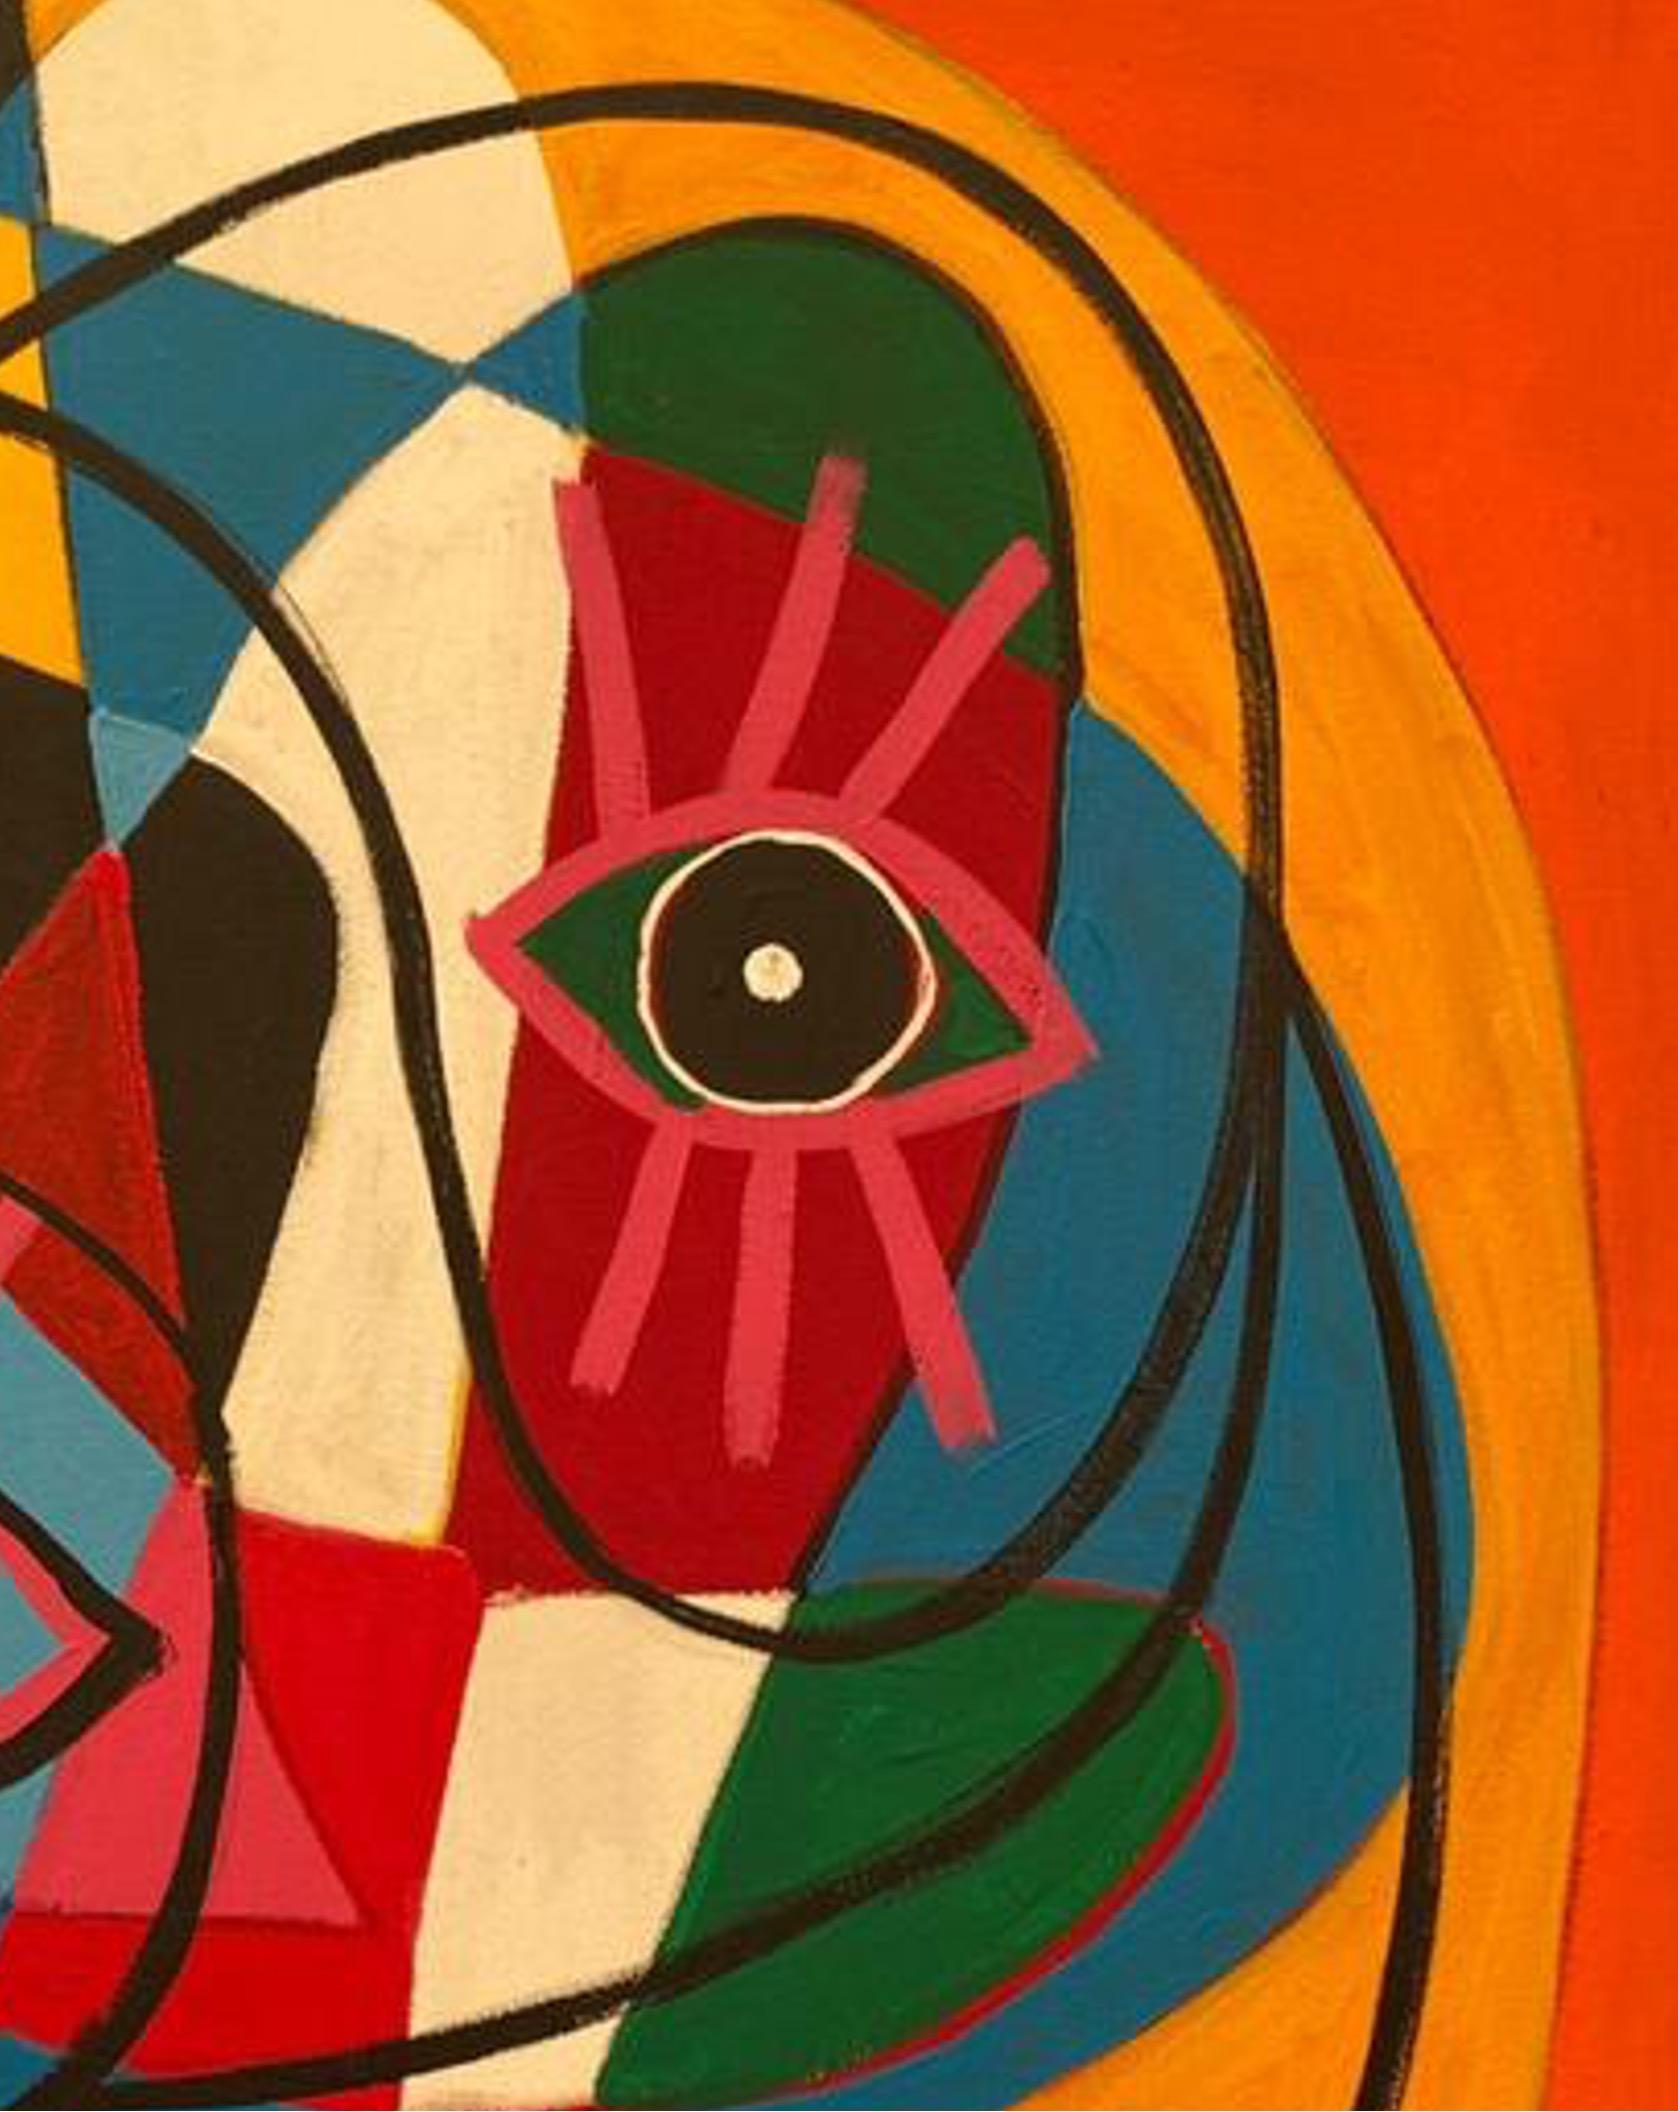 Contemporary Art, Abstract Painting
Acrylic on canvas
150x110cm
Signed 



About the artist
Enrique Pichardo (Mexico City, 1973) graduated from Escuela Nacional de Pintura, Escultura y Grabado (ENPEG) “La Esmeralda”. As a Mexican Contemporary